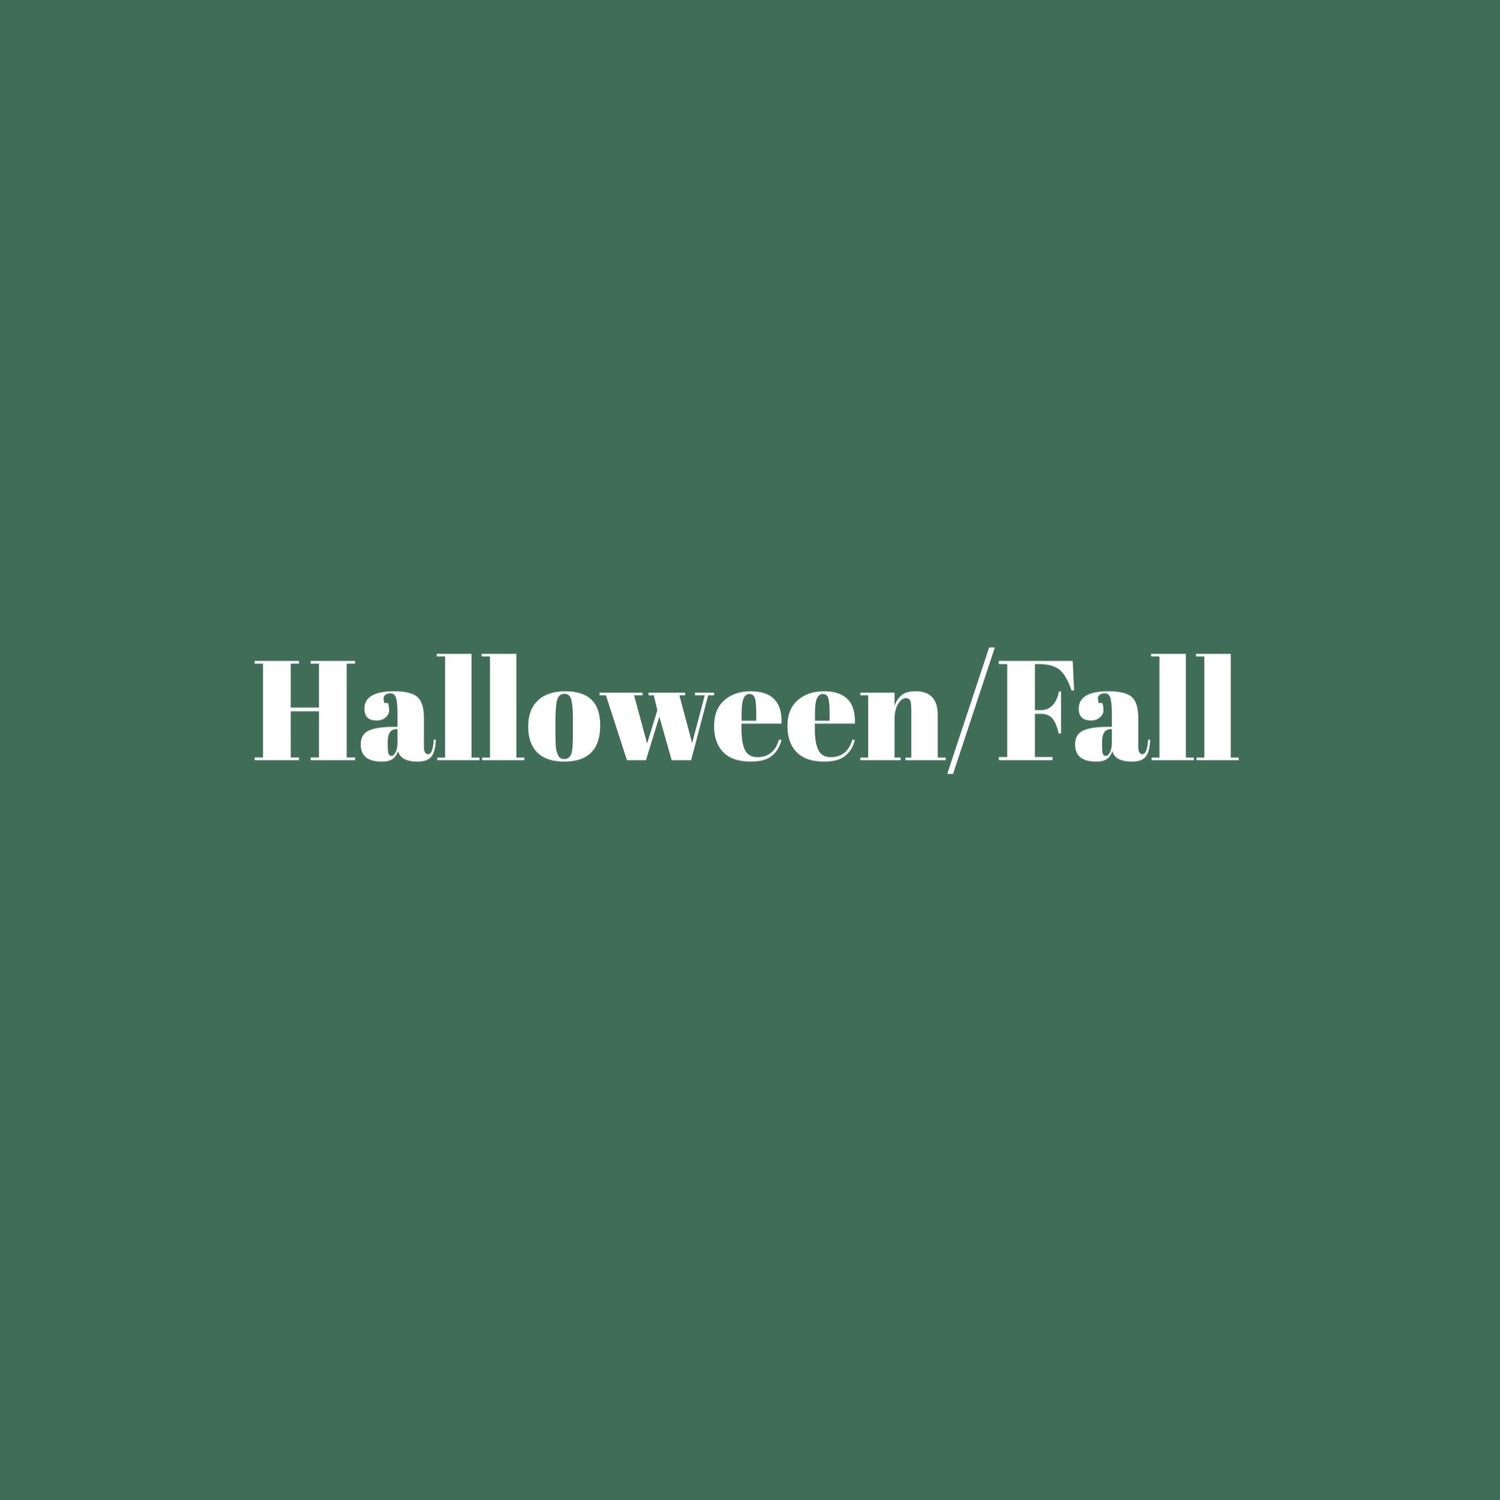 Halloween/Fall